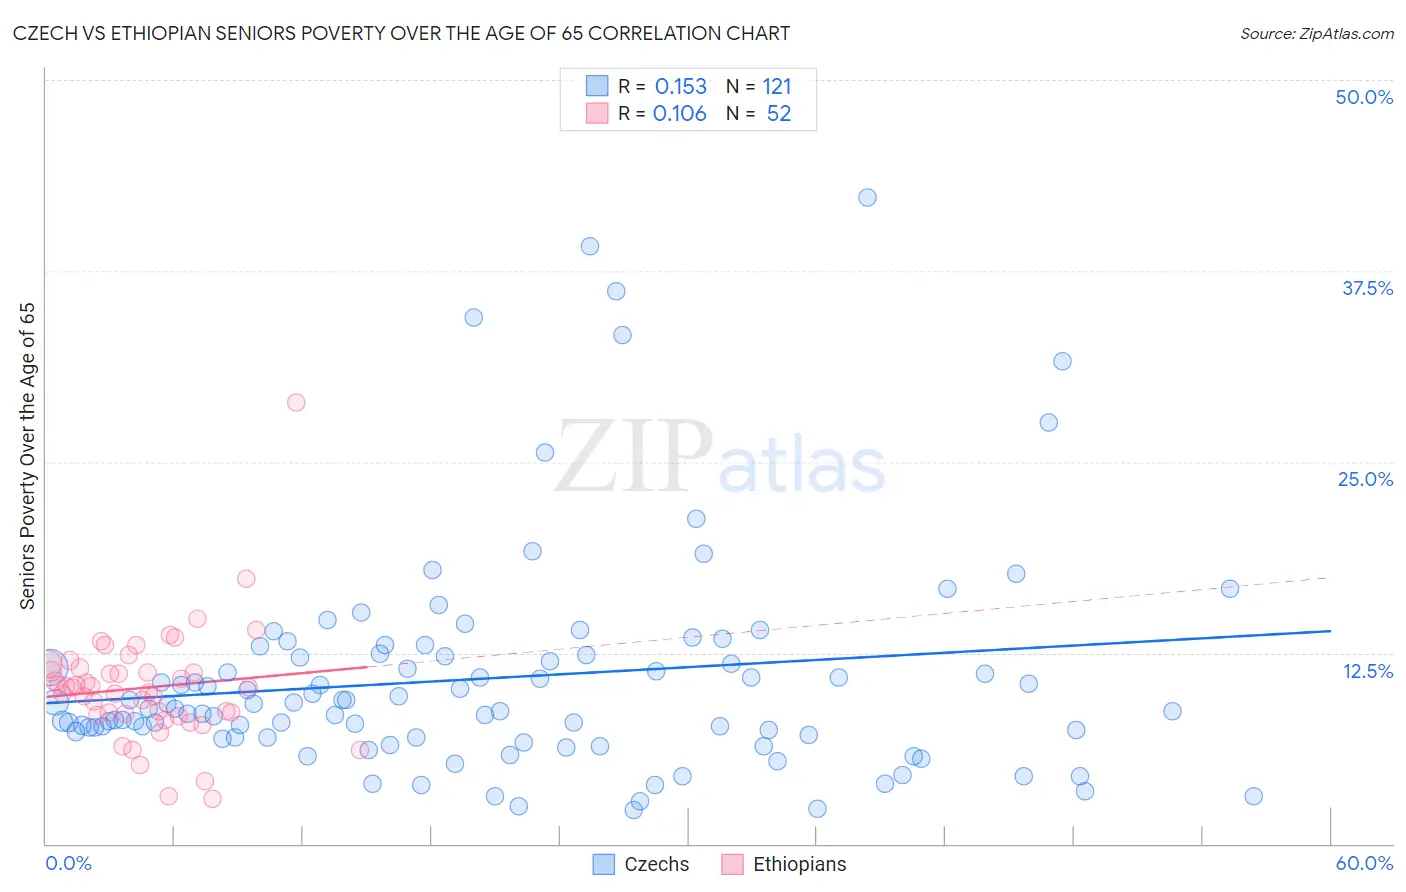 Czech vs Ethiopian Seniors Poverty Over the Age of 65